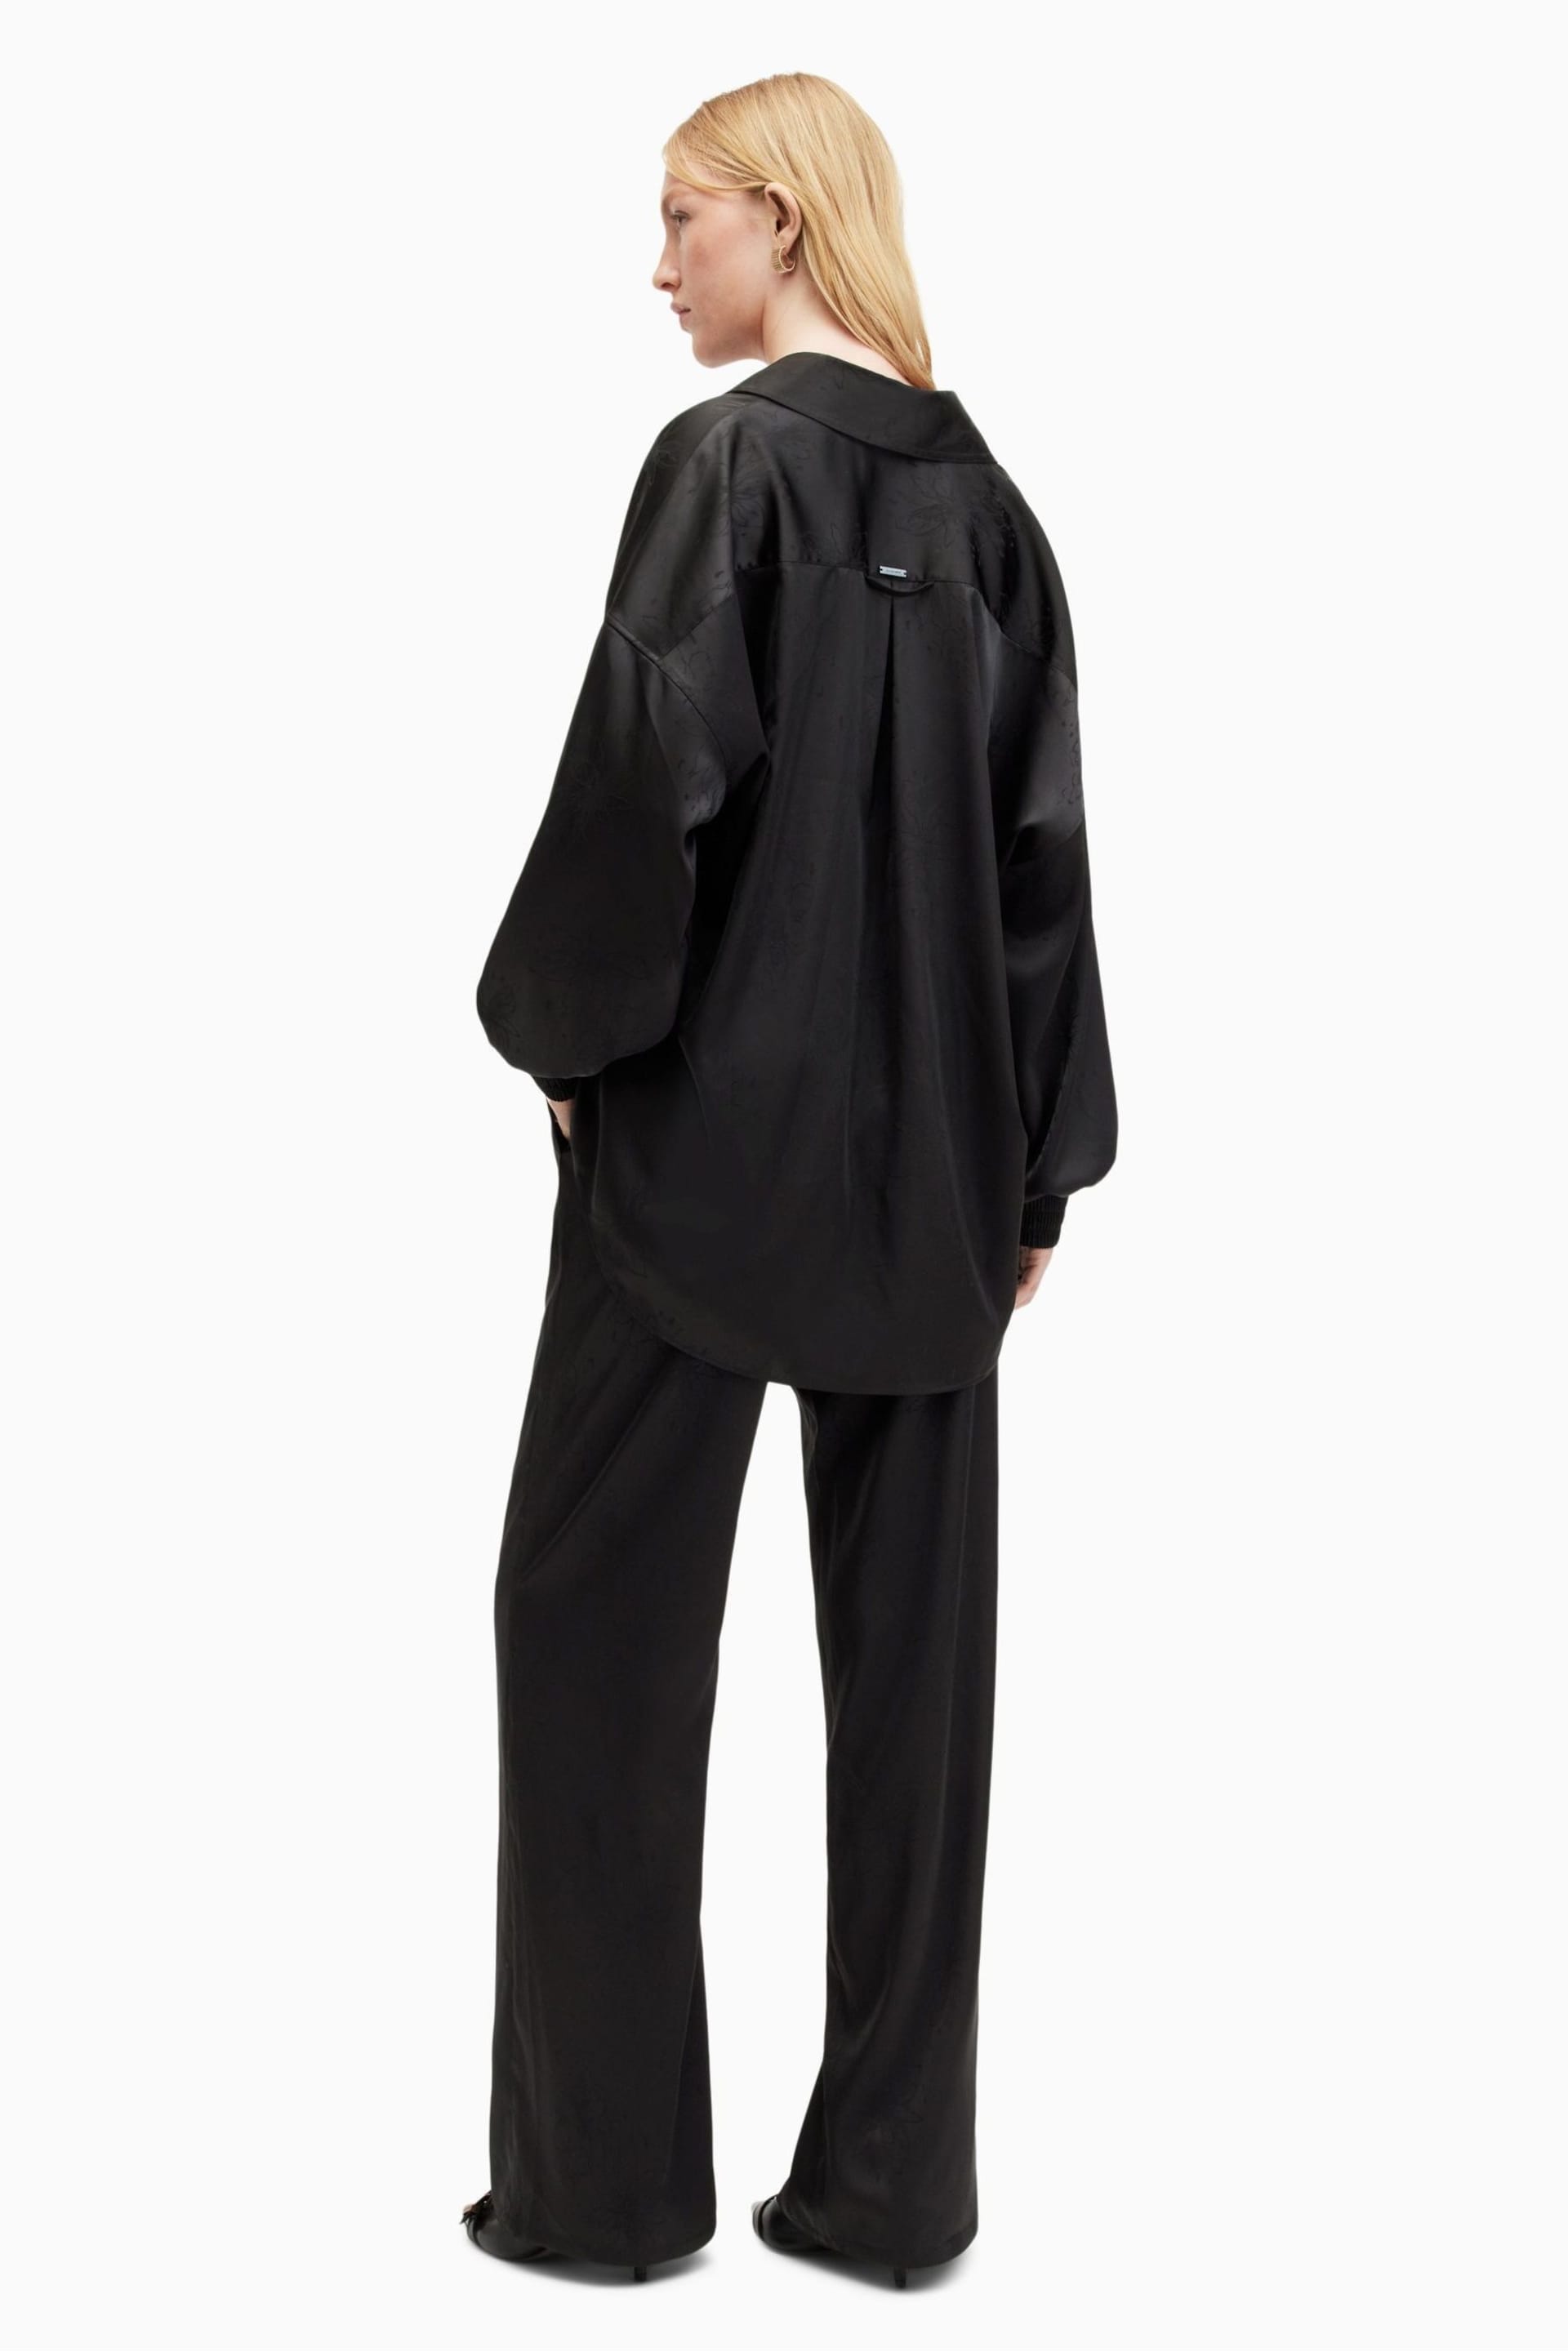 AllSaints Black Charli Jacq Trousers - Image 3 of 7